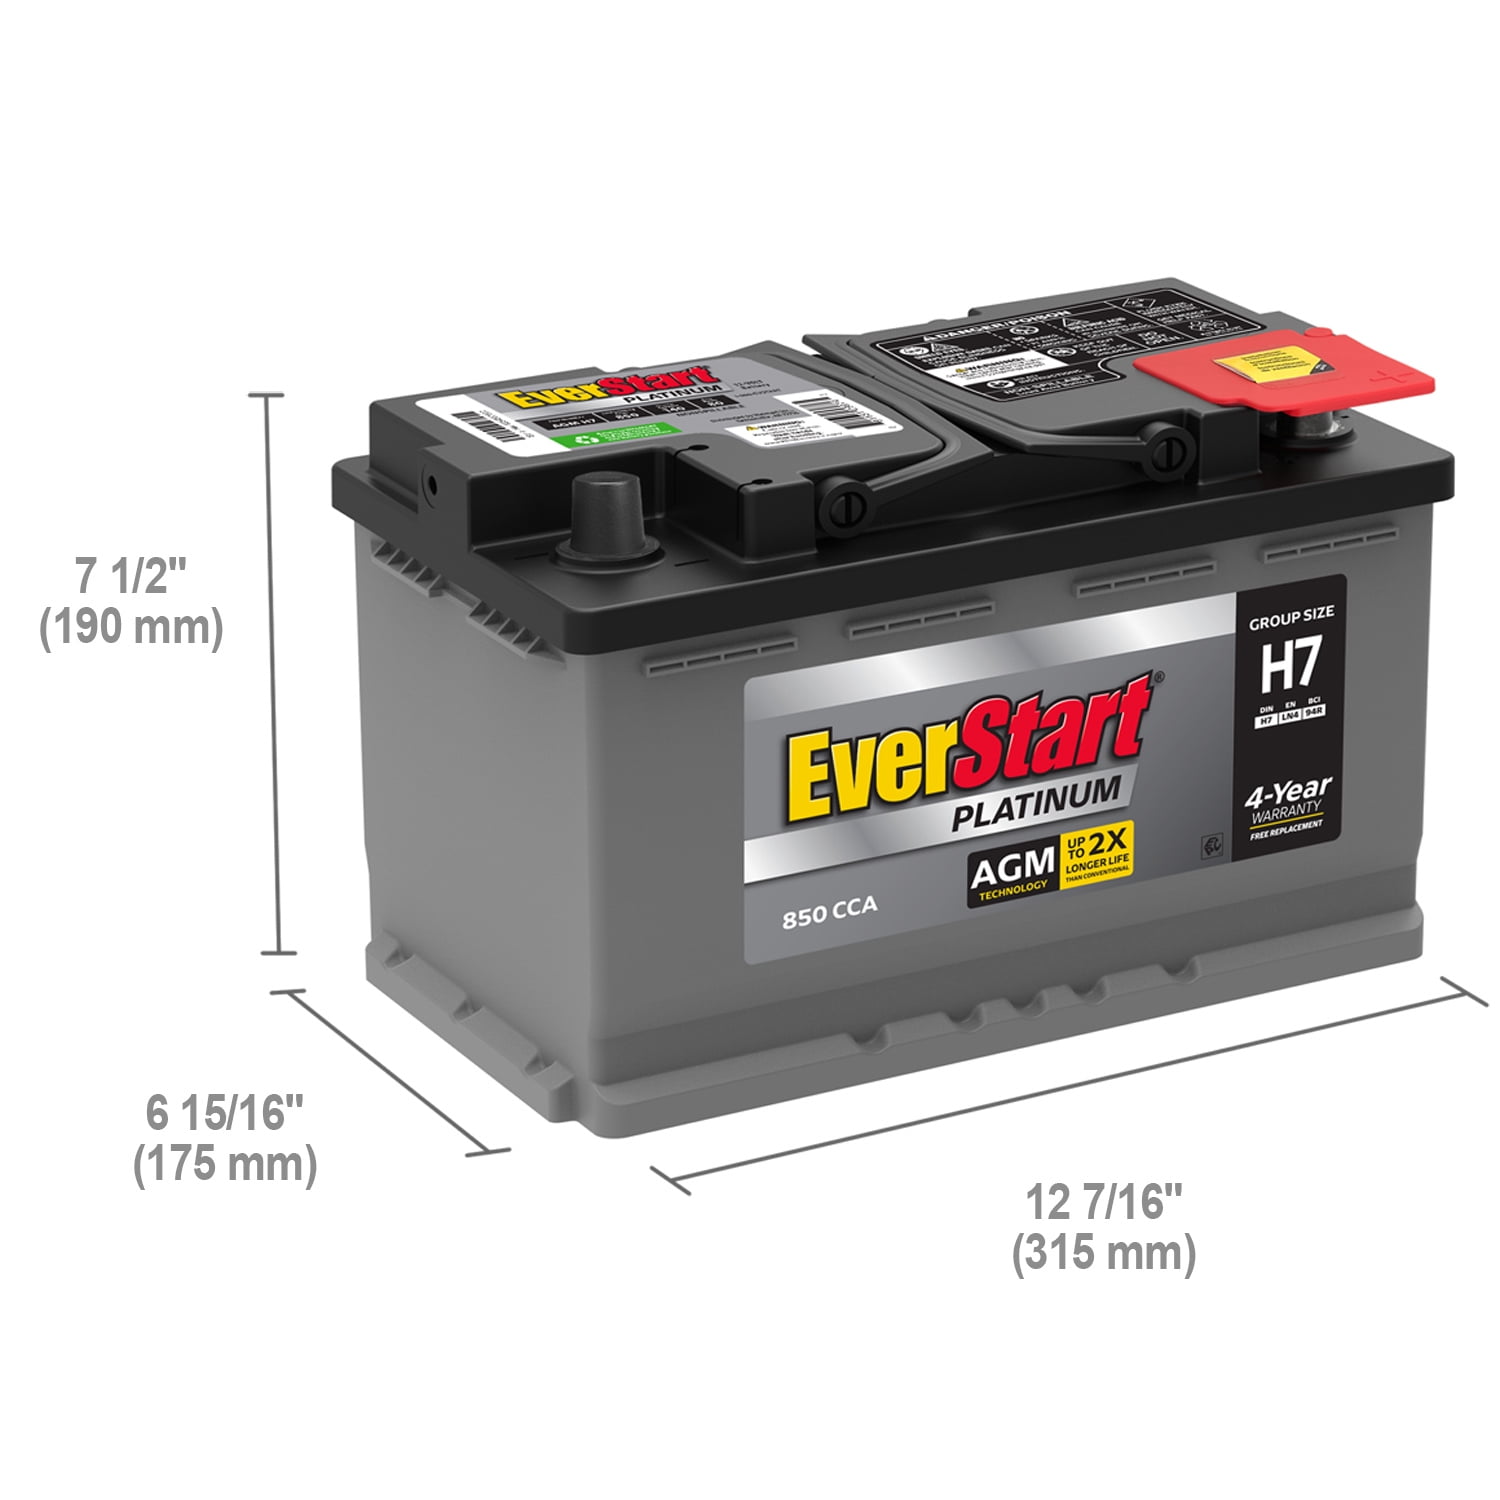 EverStart Platinum AGM Automotive Battery, Group Size H7 / LN4